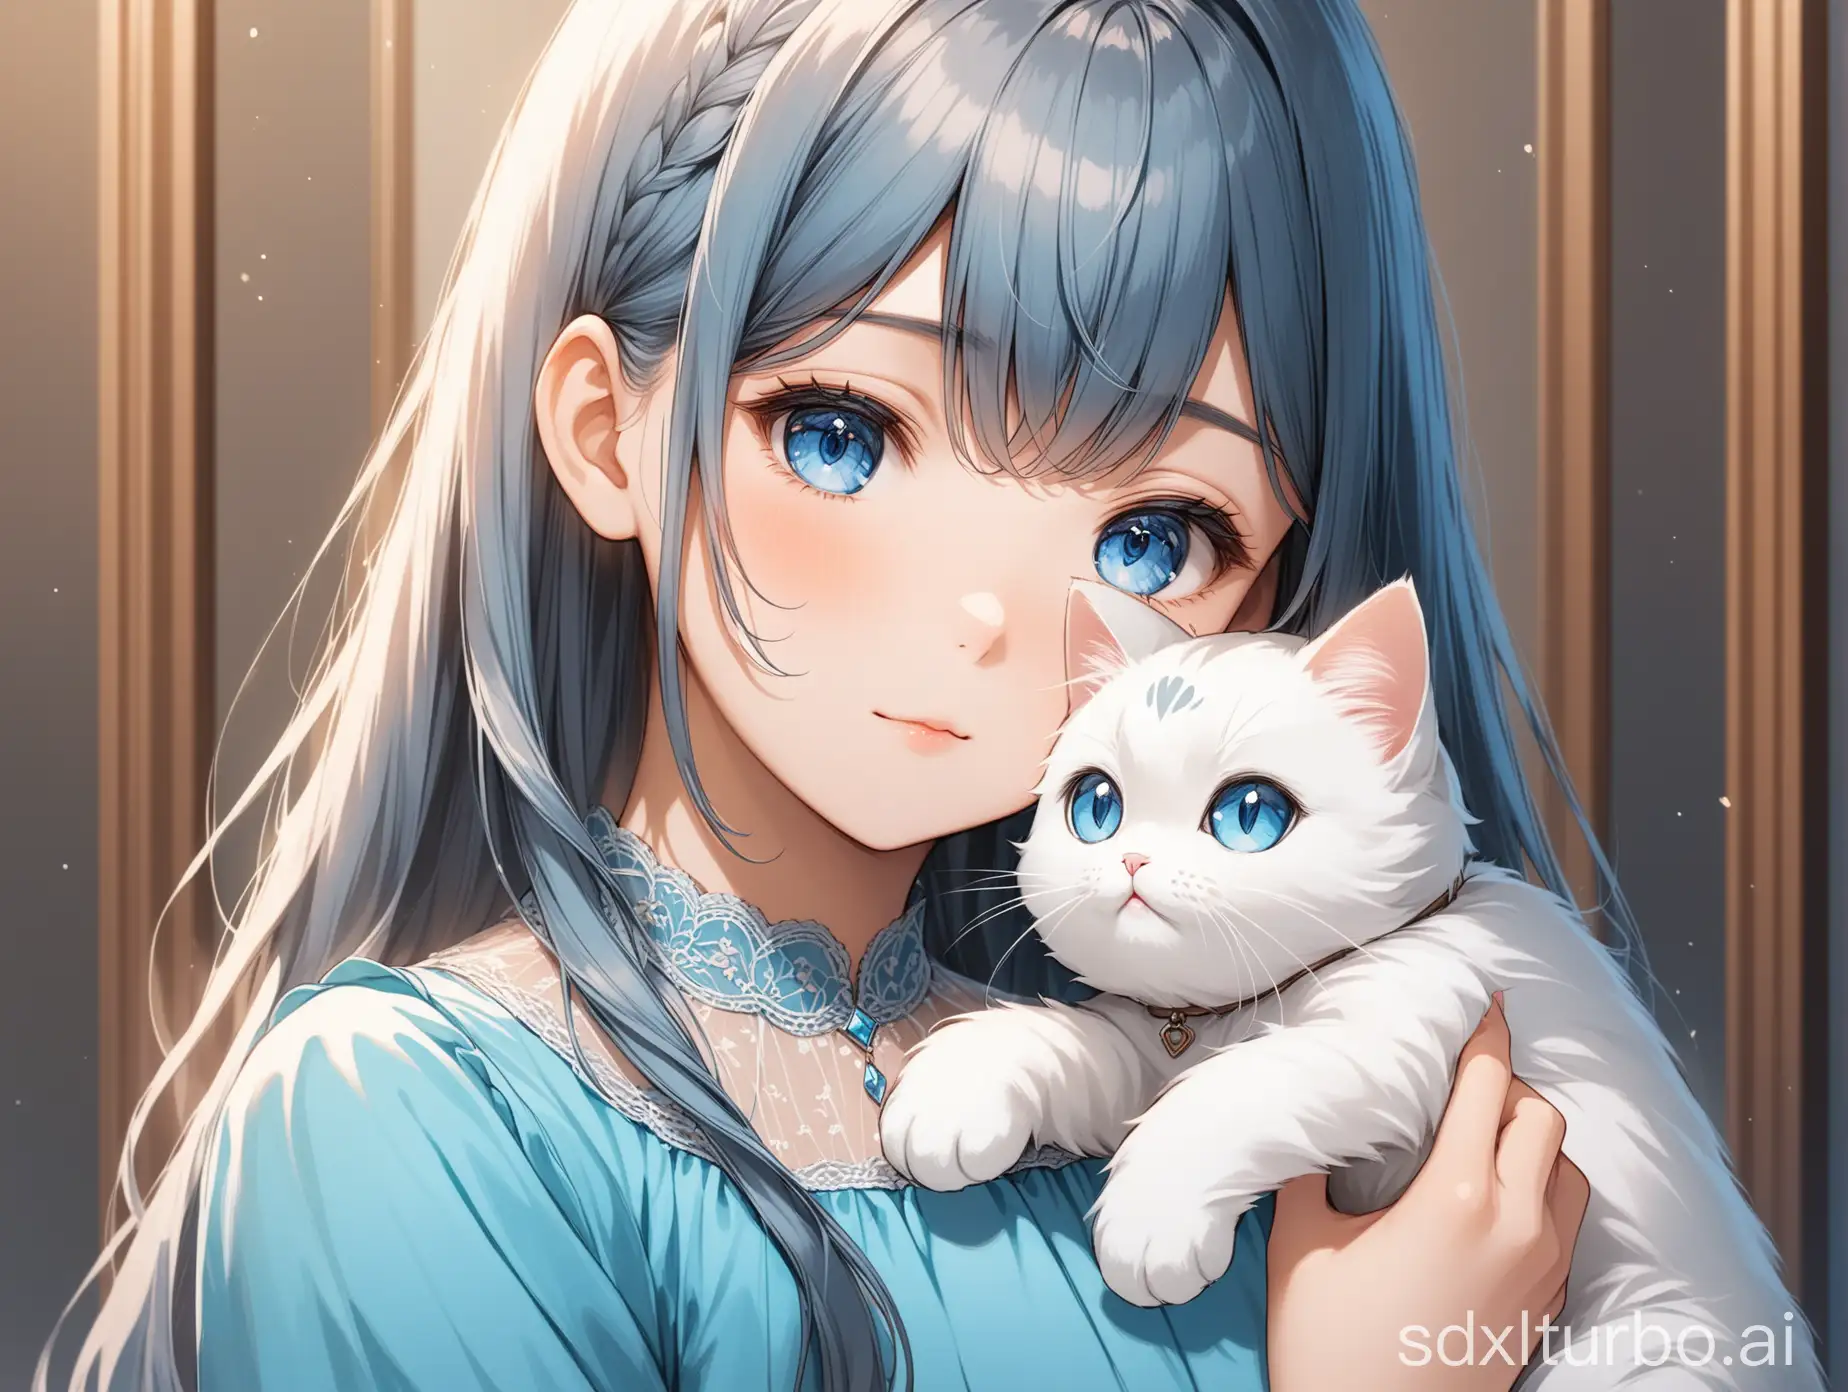 Girl-in-Blue-Dress-Cuddling-White-and-Grey-Plush-Cat